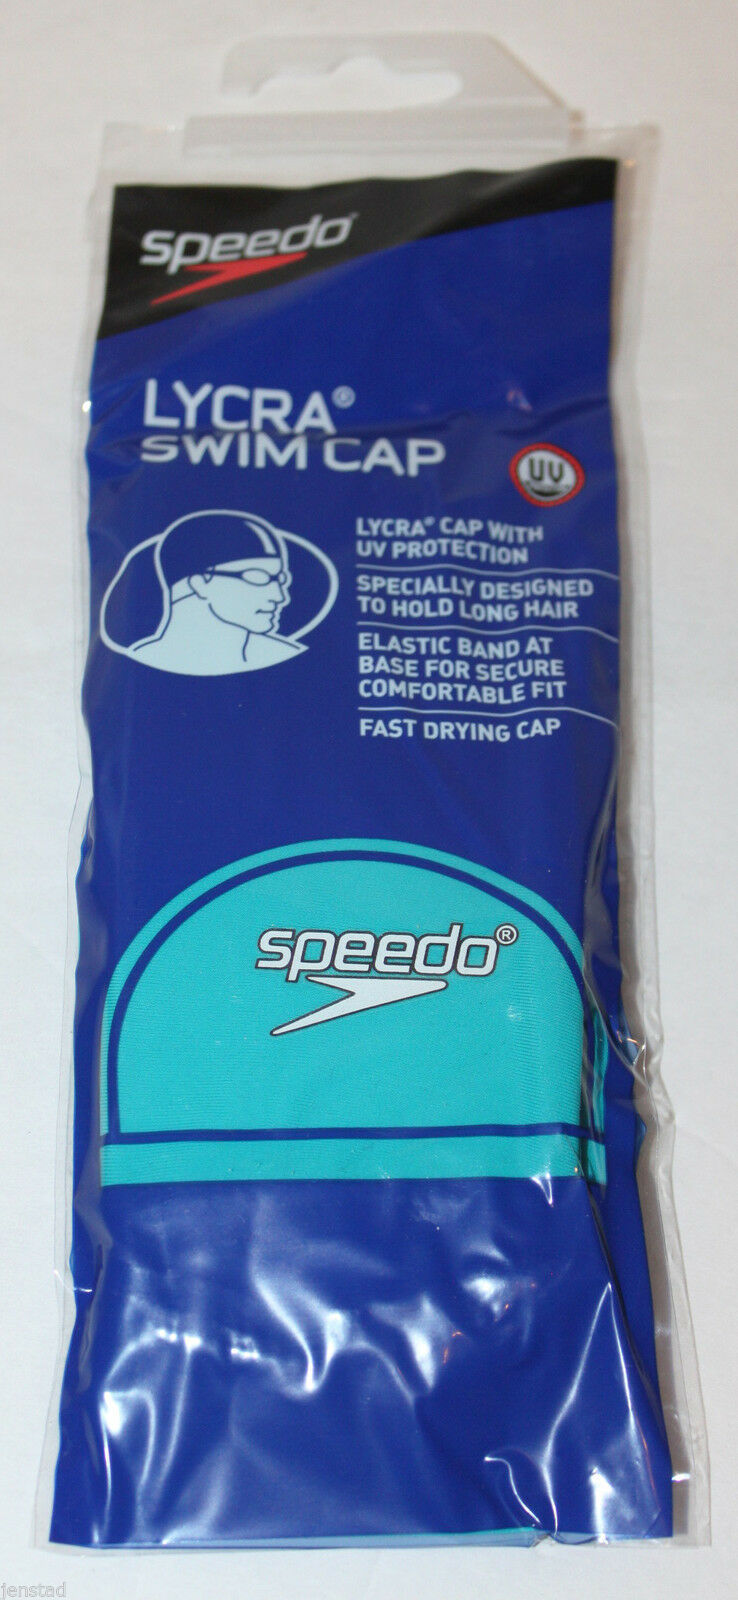 SPEEDO LYCRA SWIM CAP DARK TEAL UV PROTECTION STRETCH SUN PROTECTION SWIMWEAR